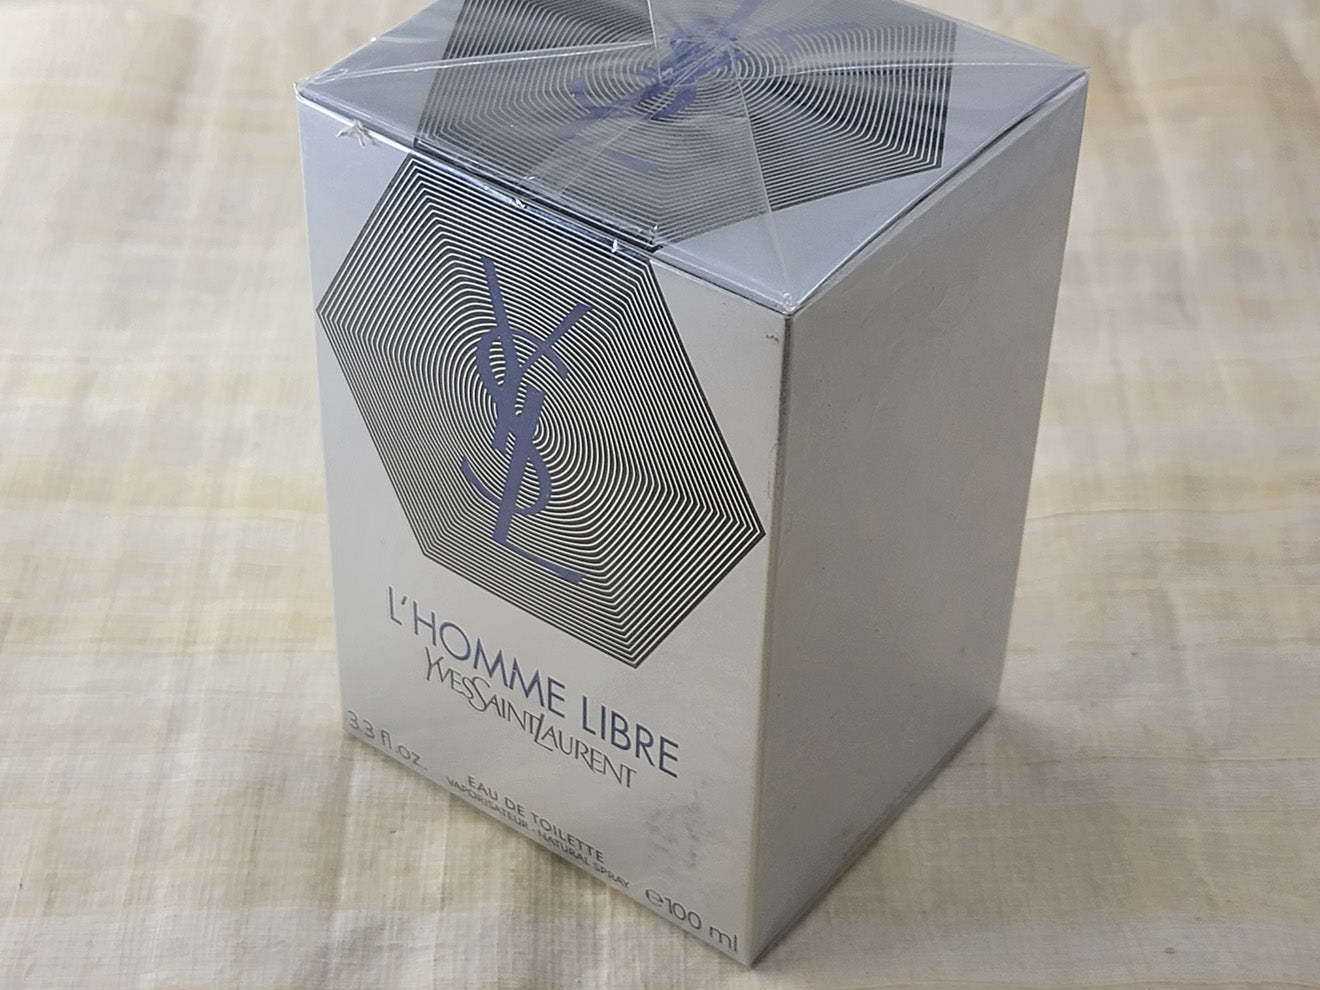 L'Homme Libre Yves Saint Laurent for men EDT Spray 100 ml 3.4 oz, Vintage, Rare